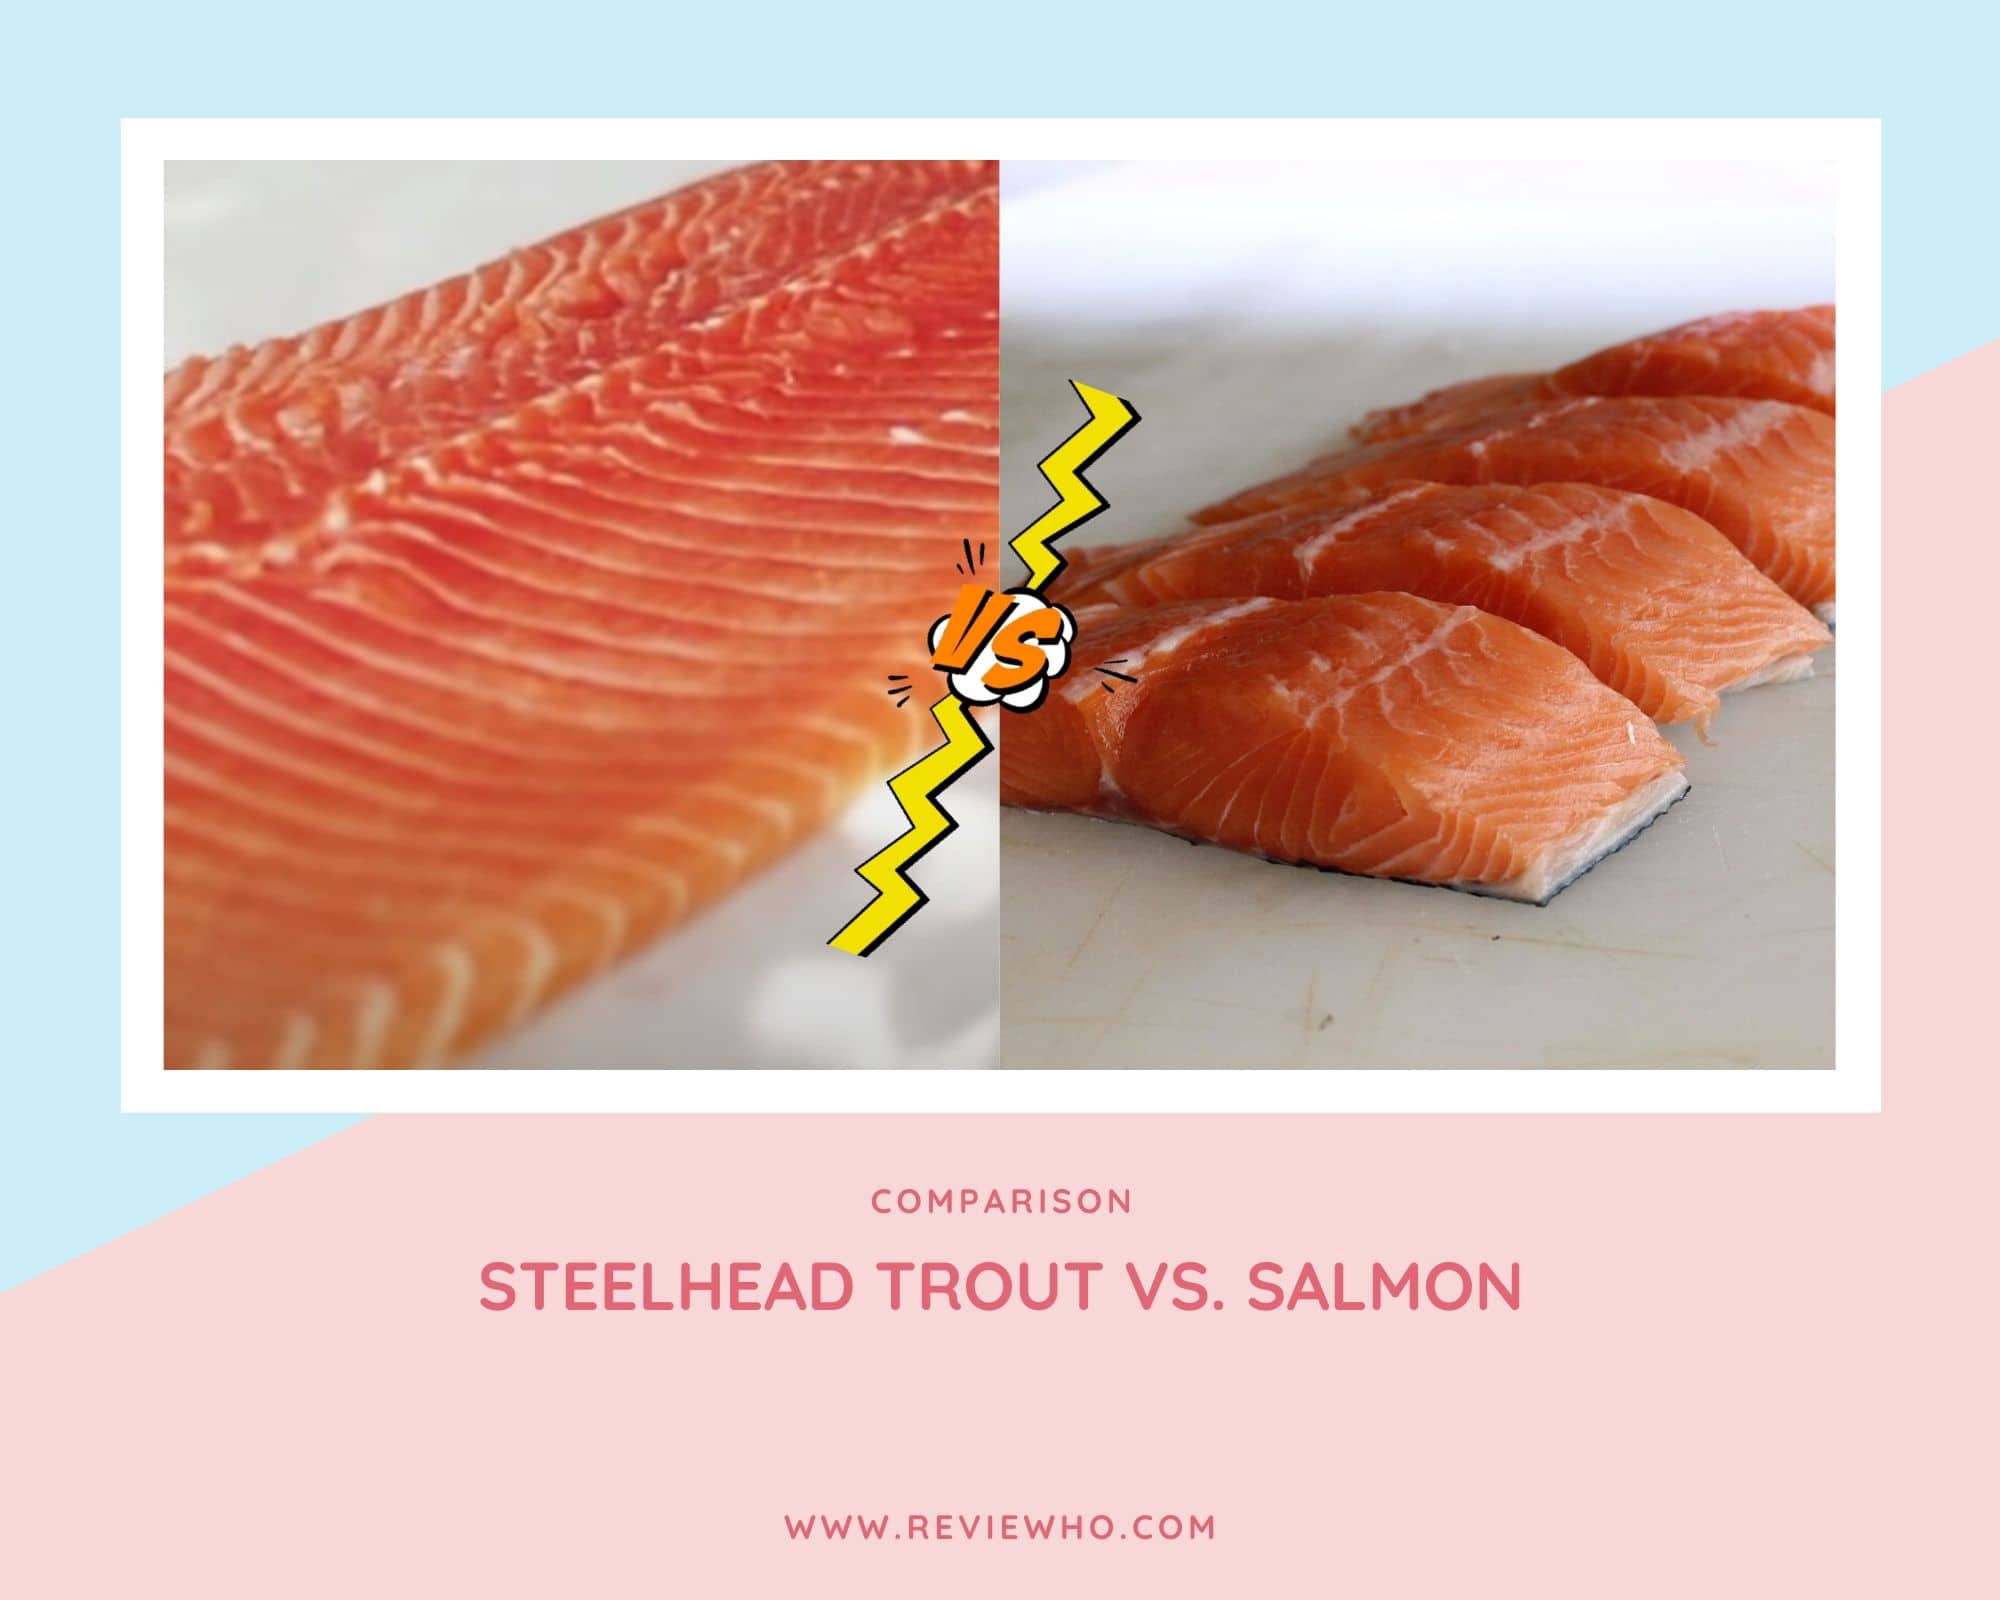 steelhead trout nutrition vs salmon nutrition